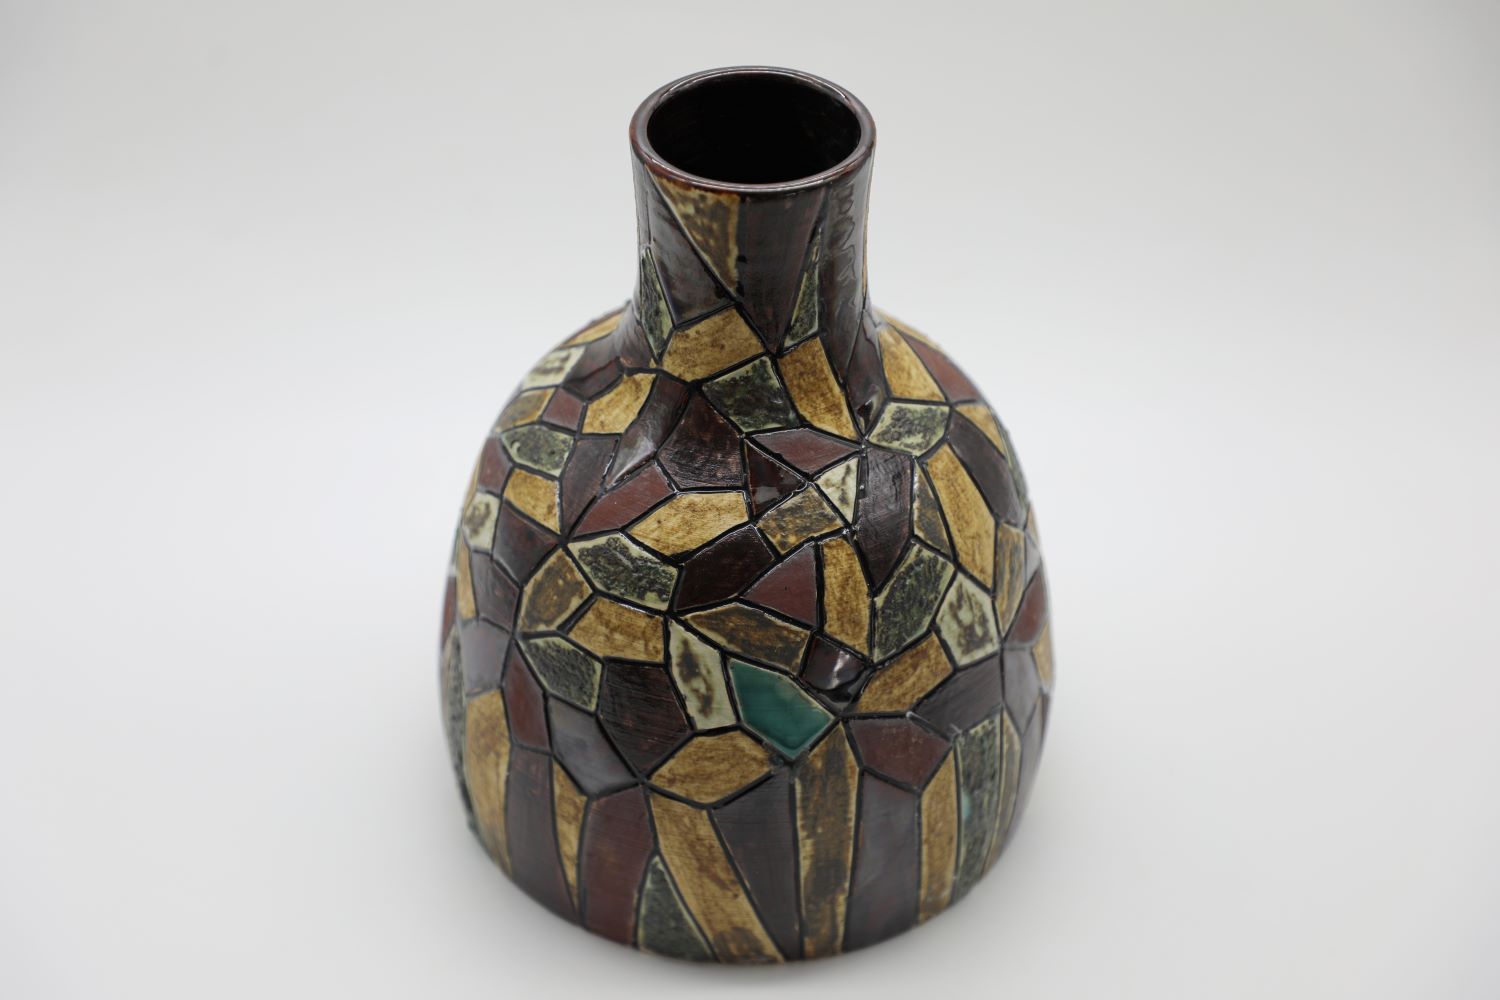 Autumn Vase II - Vietnamese Ceramic Artwork by Artist Nguyen Thu Thuy